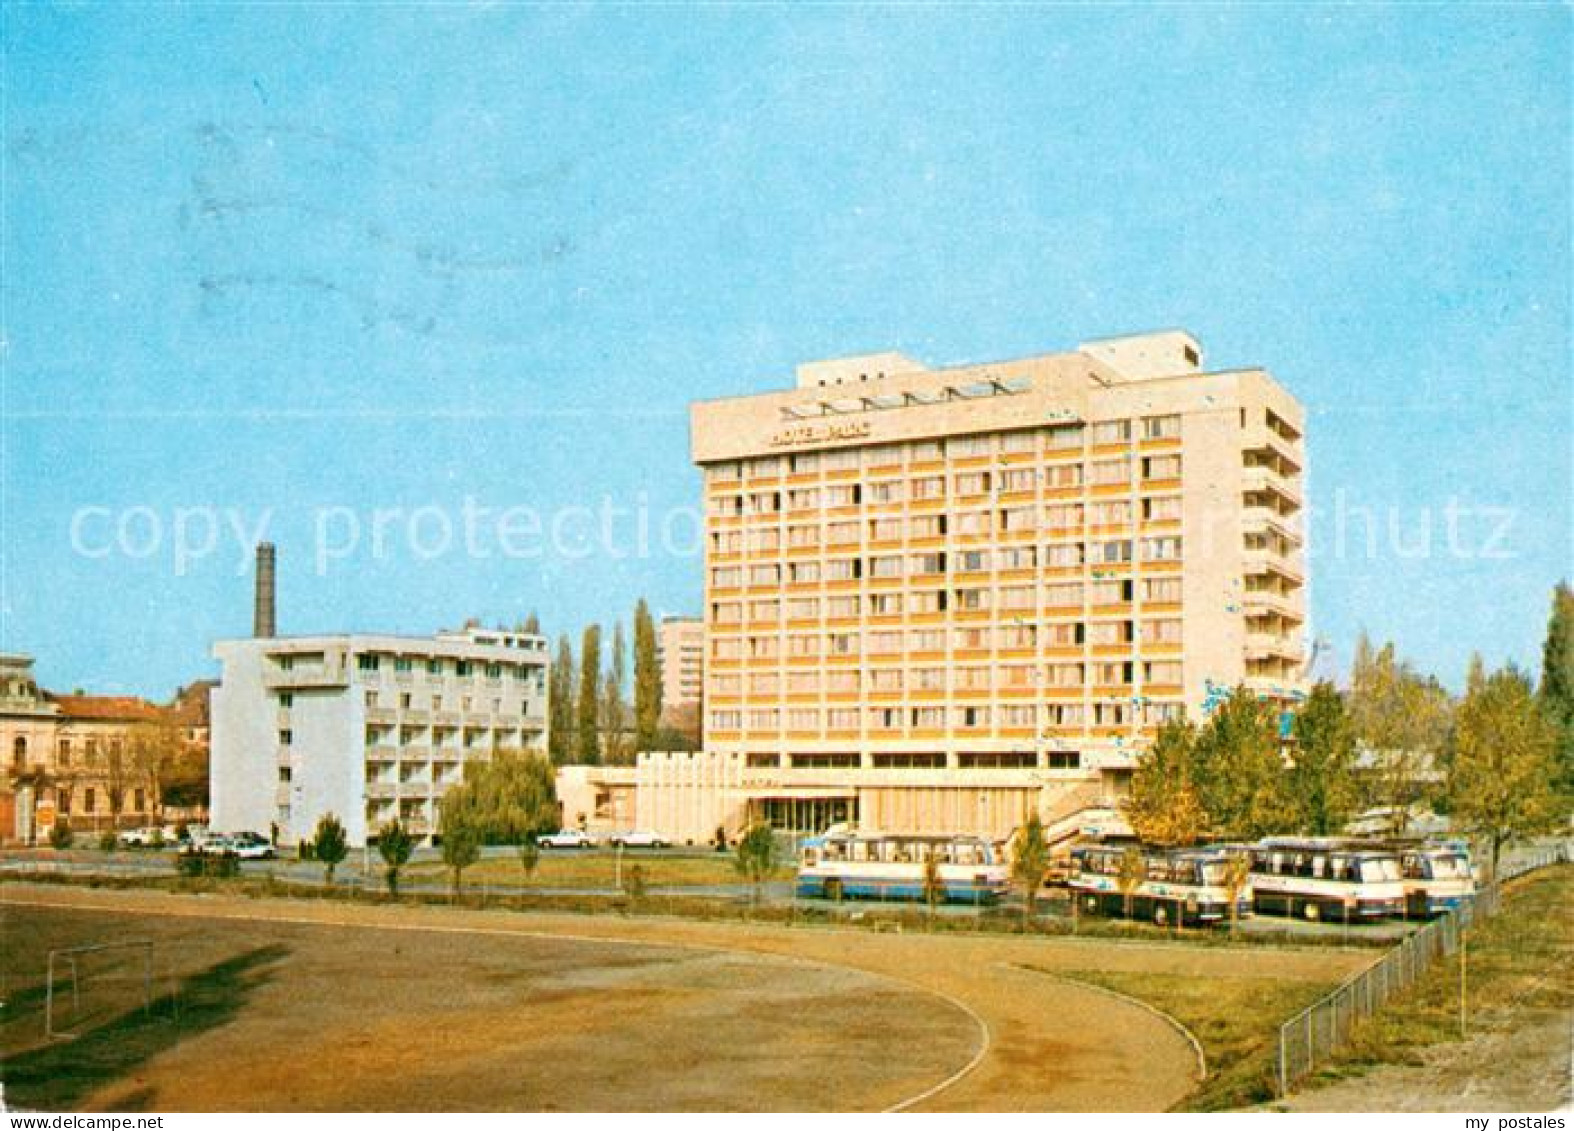 73652021 Arad Hotelul Parc Arad - Roemenië